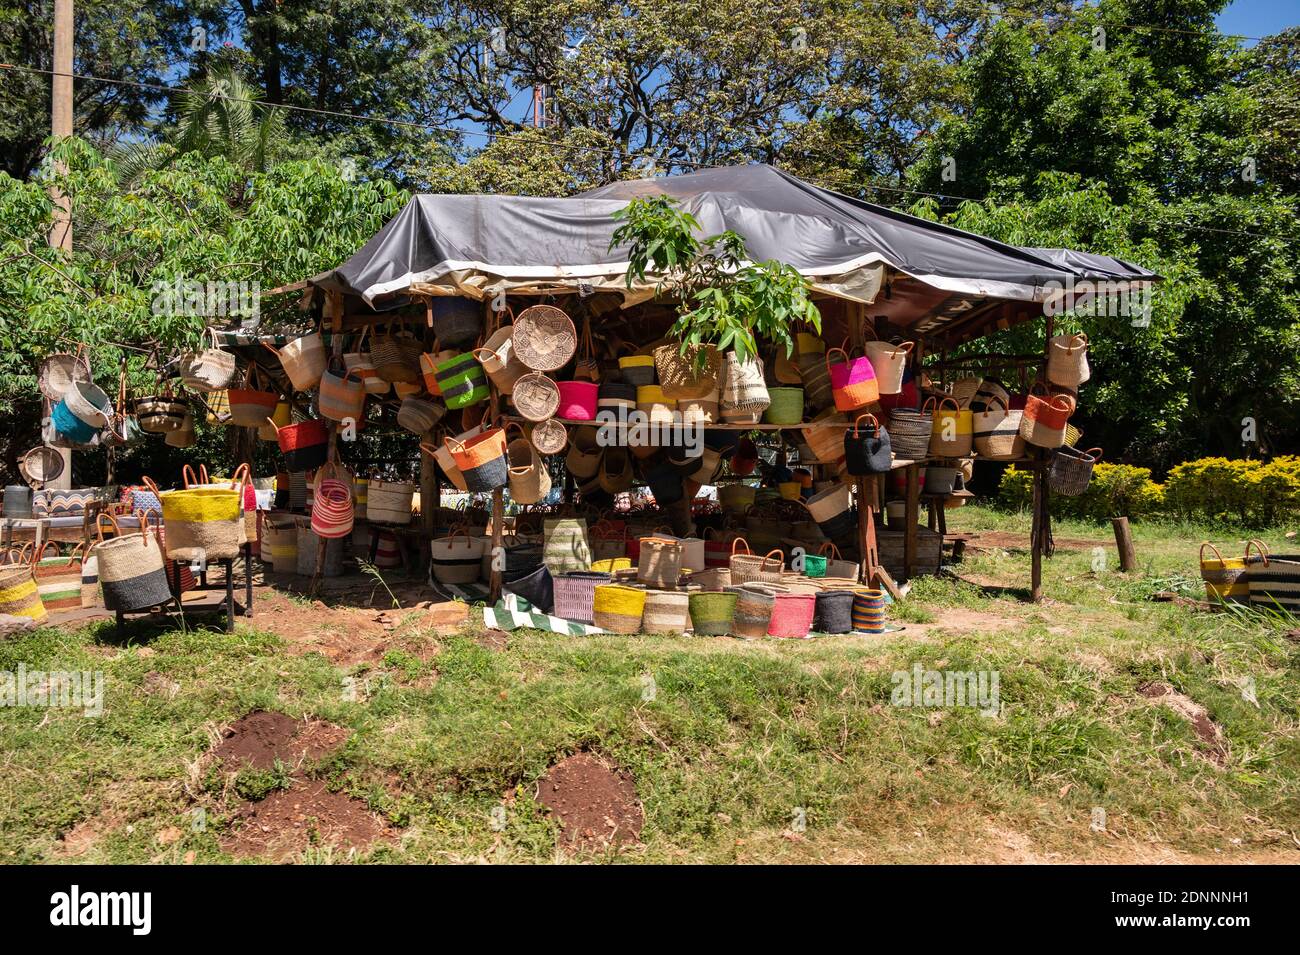 Vari fatti a mano sisal tessuto cesti e sacchi sul display dalla strada, Nairobi, Kenia Foto Stock